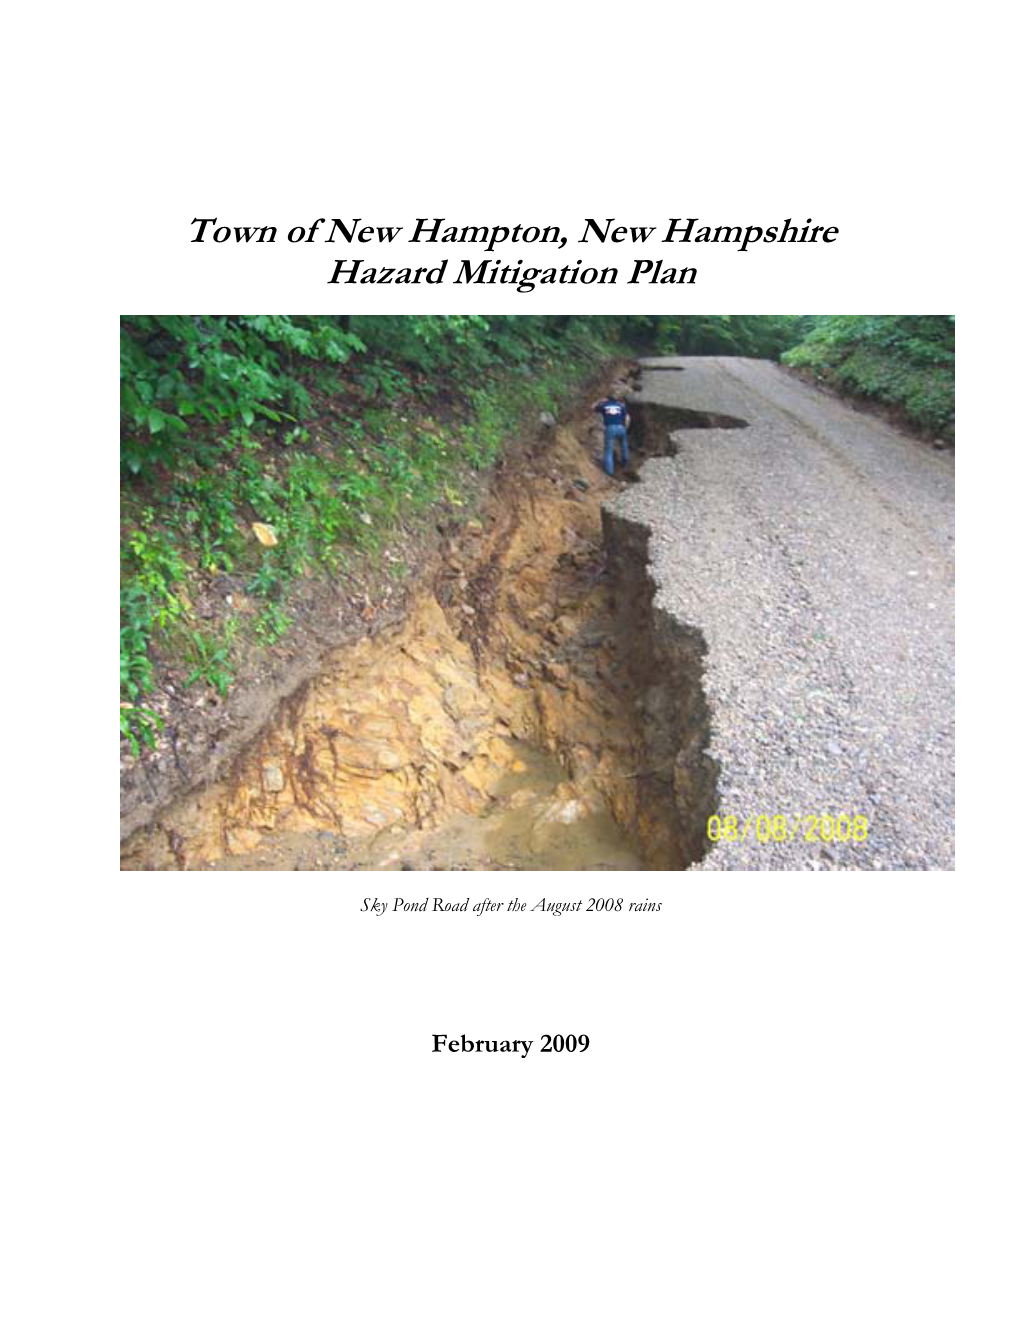 Town of New Hampton, New Hampshire Hazard Mitigation Plan